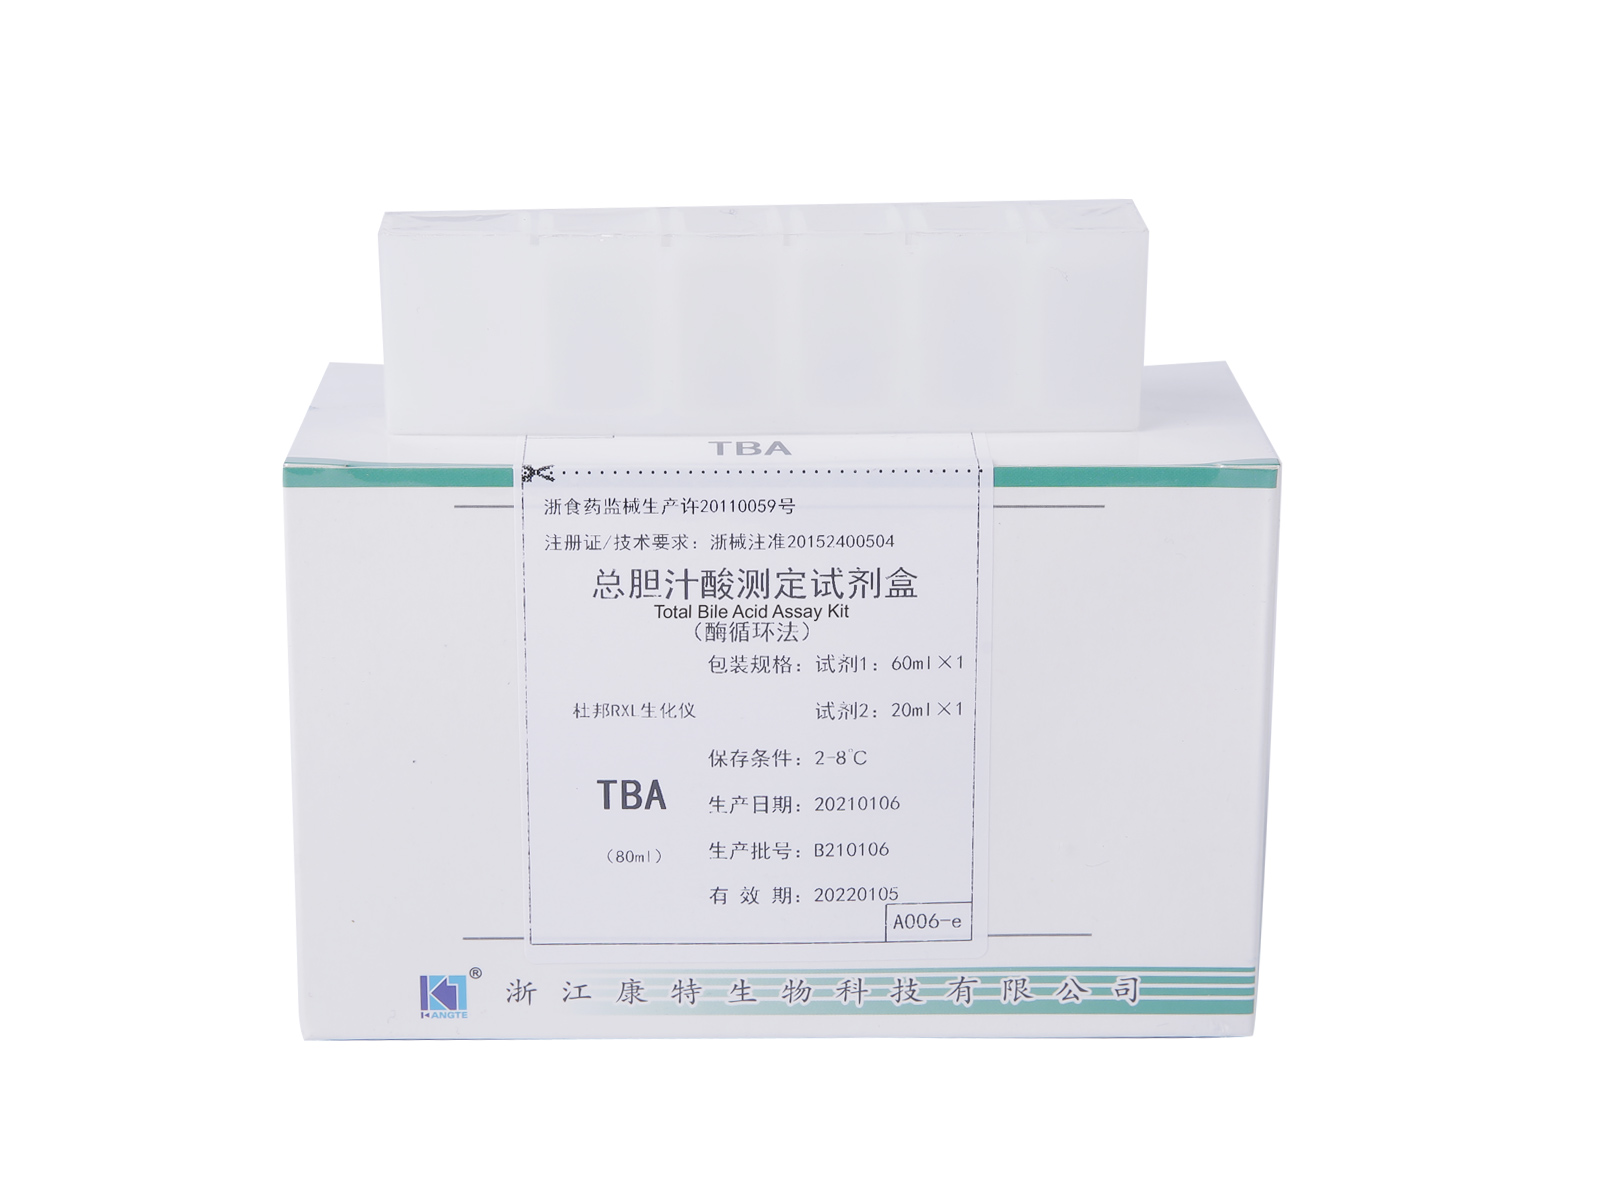 detail of 【TBA】Totale galzuurtestkit (enzymcyclusmethode)